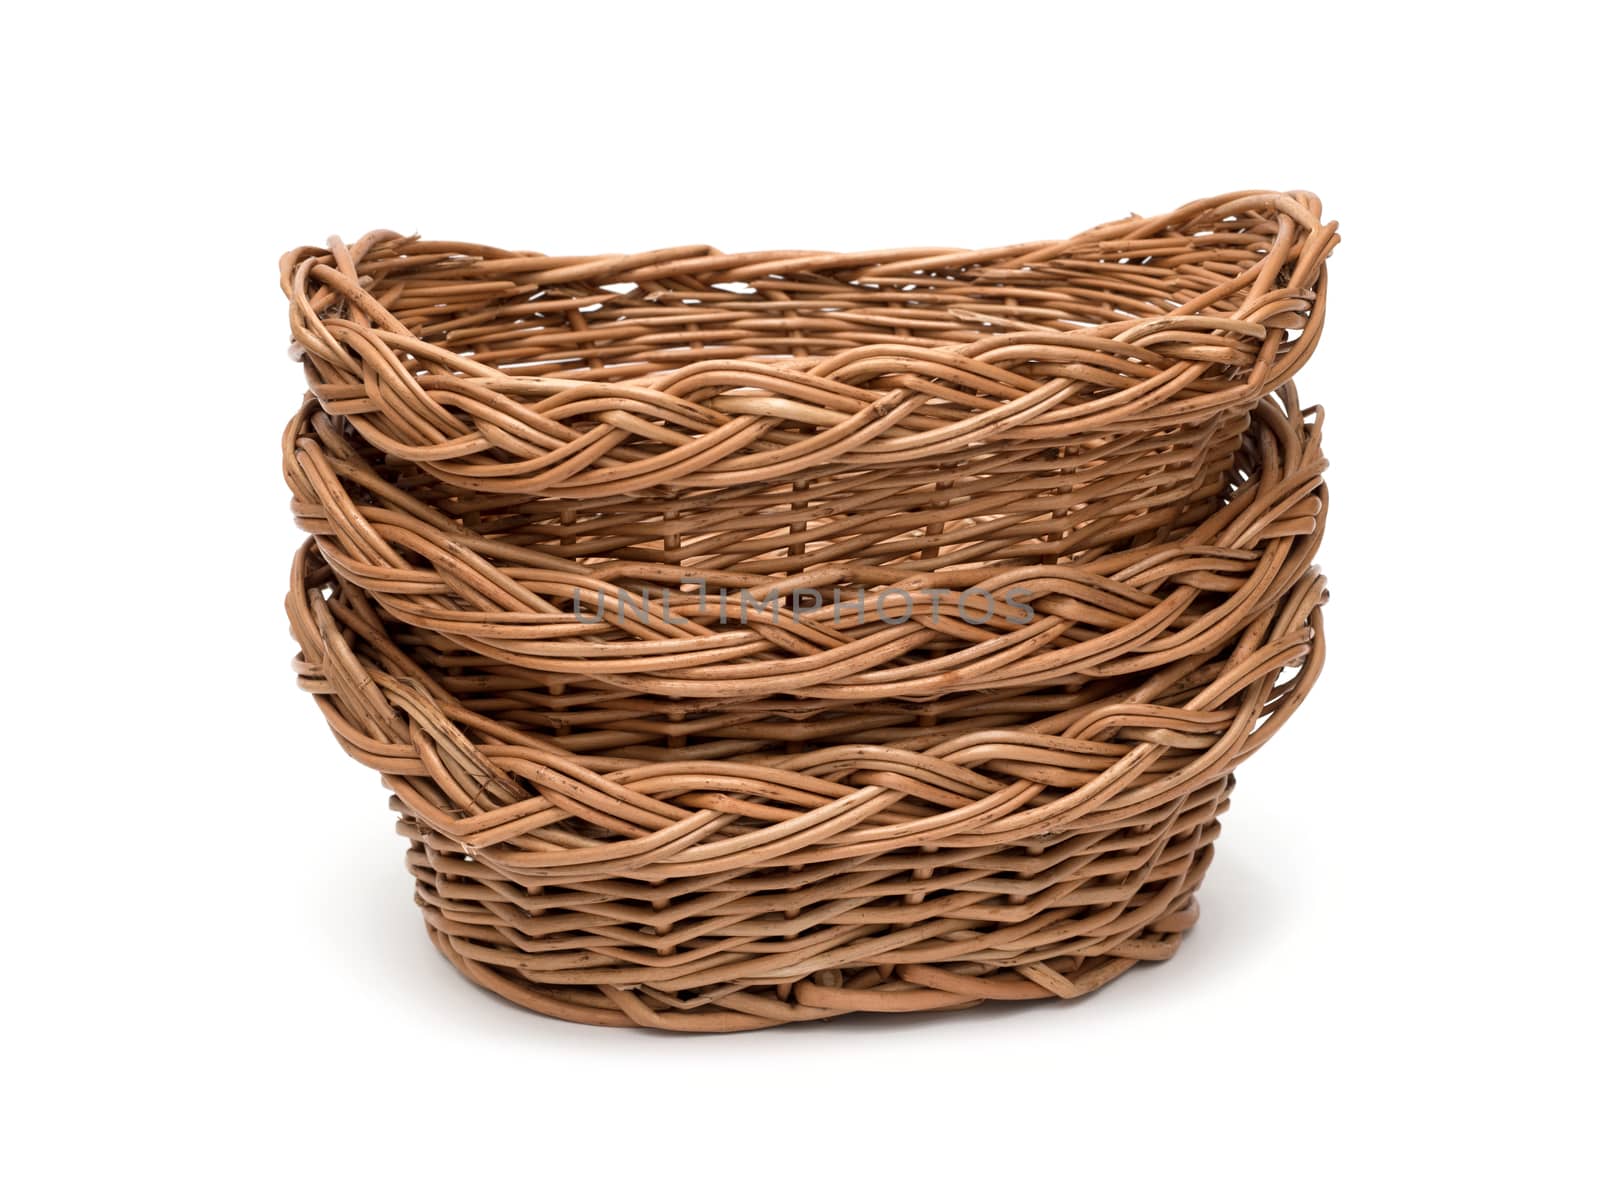 wicker basket on a white background by DNKSTUDIO